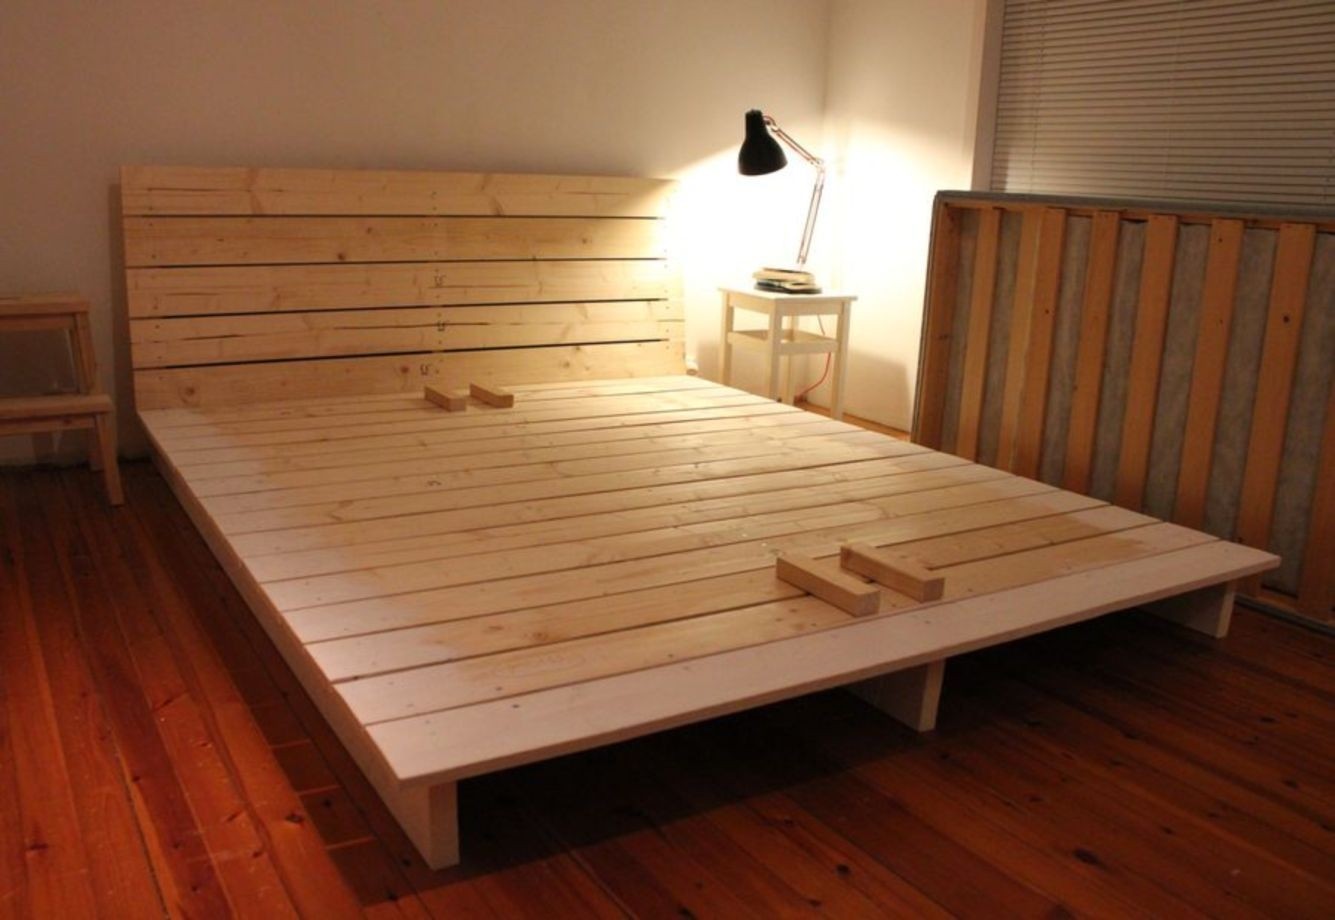 Simple platform beds